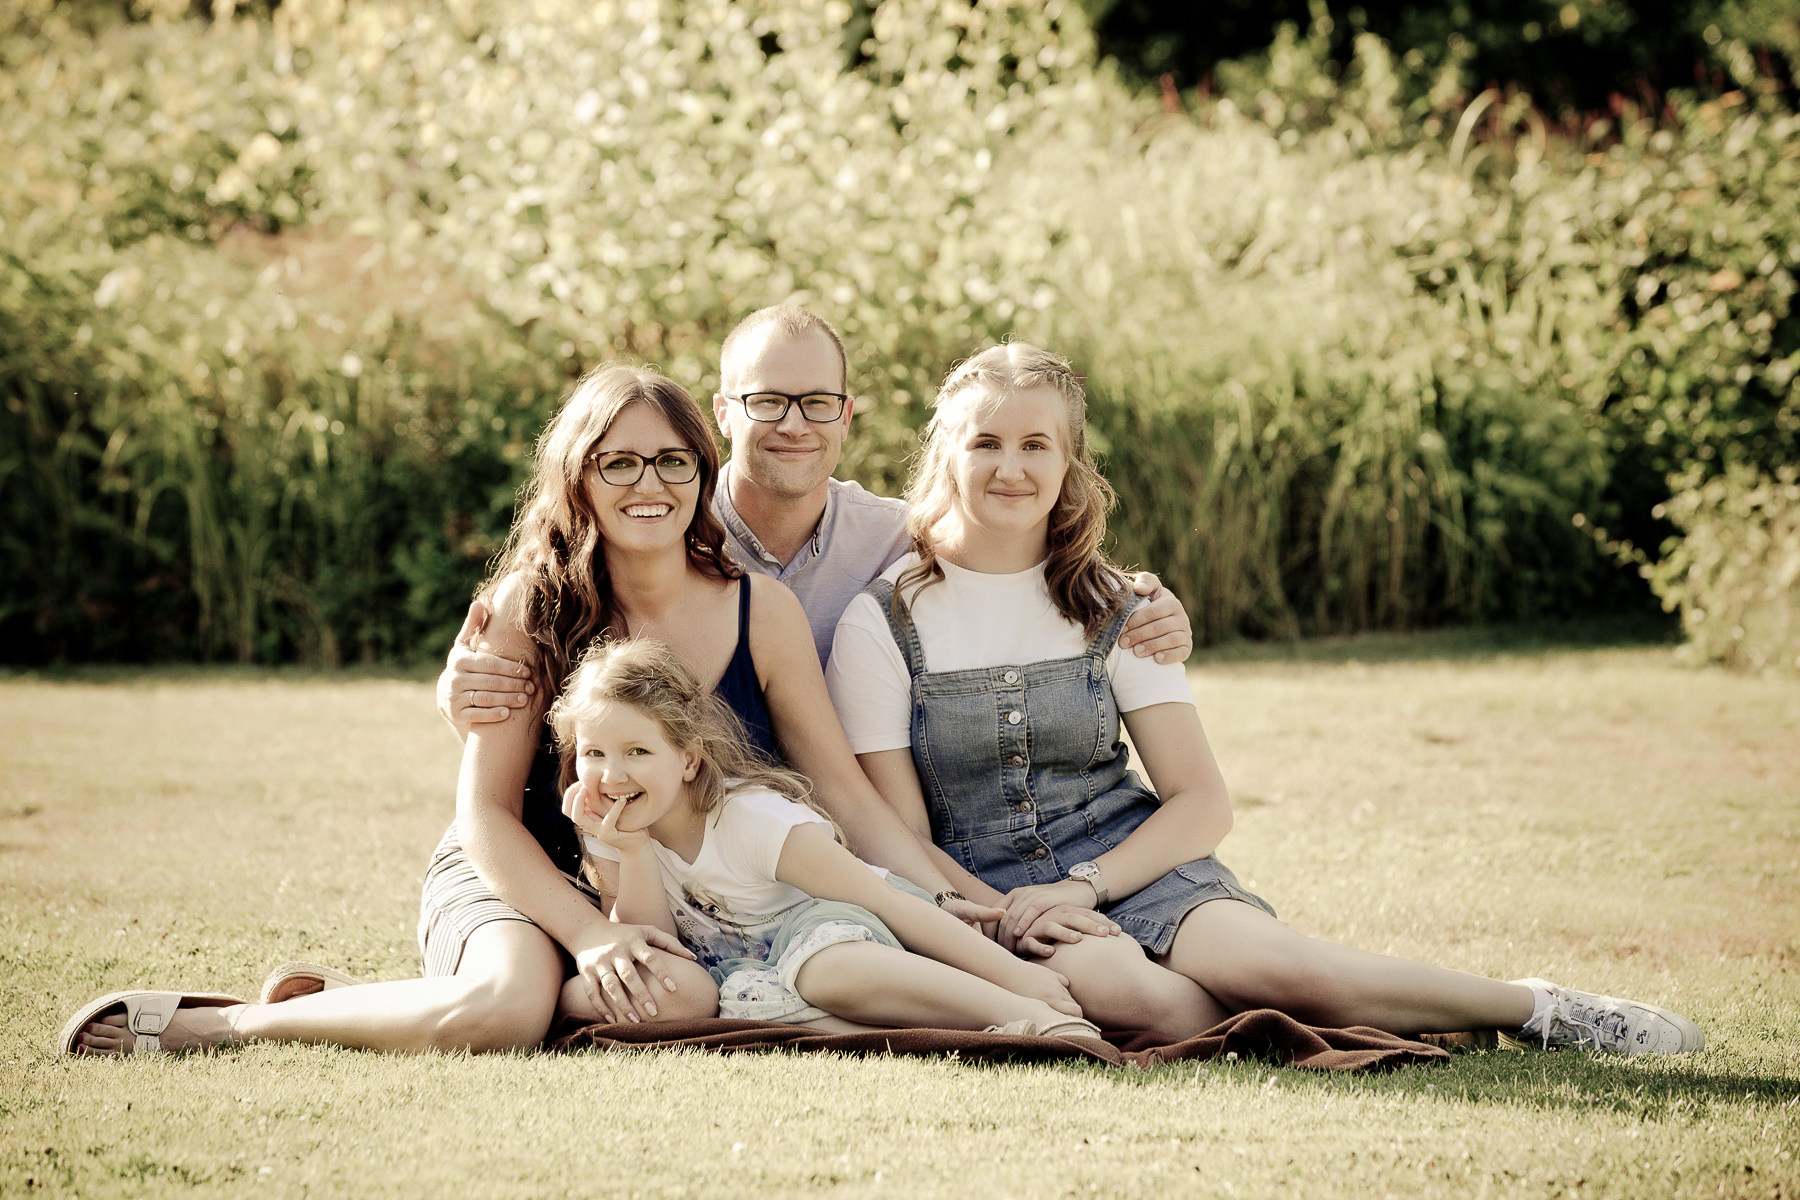 Professionelle ungestellte Familienfotos Familienbilder Fotograf